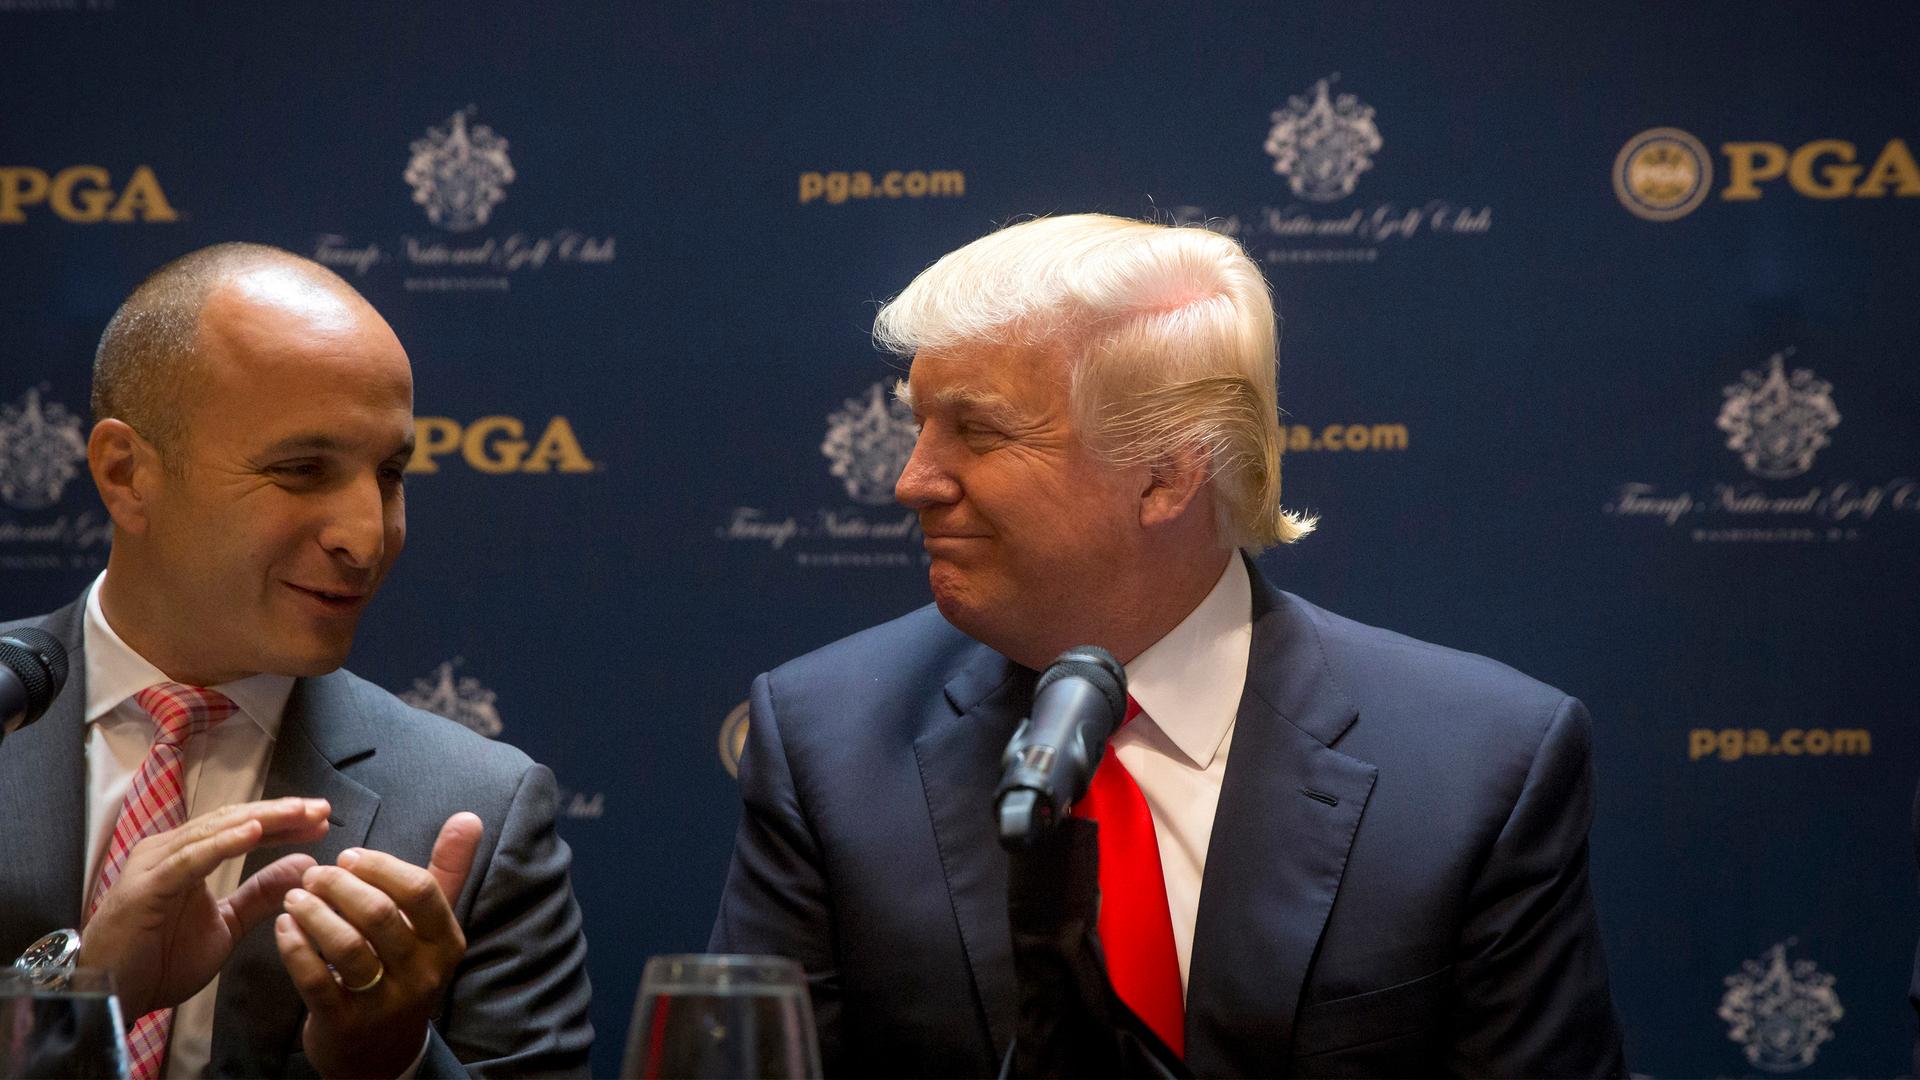 Pete Bevacqua, PGA Golf, fires Trump